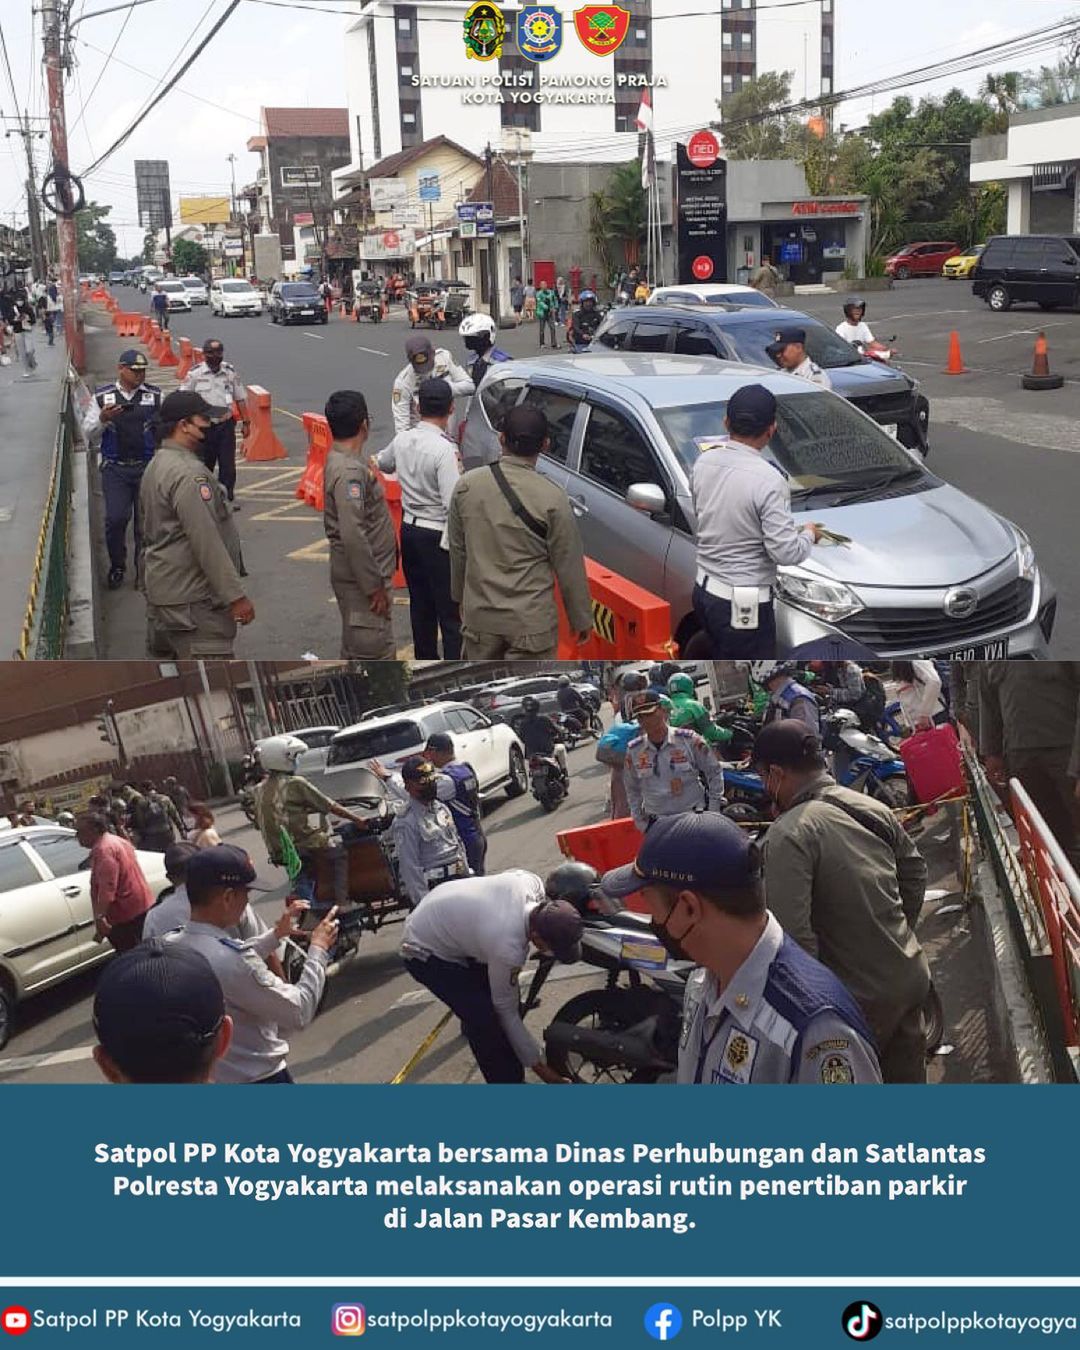 atpol PP Kota Yogyakarta bersama Dinas Perhubungan dan Satlantas Polresta Yogyakarta Melaksanakan Operasi Rutin Penertiban Parkir di Jalan Pasar Kembang.